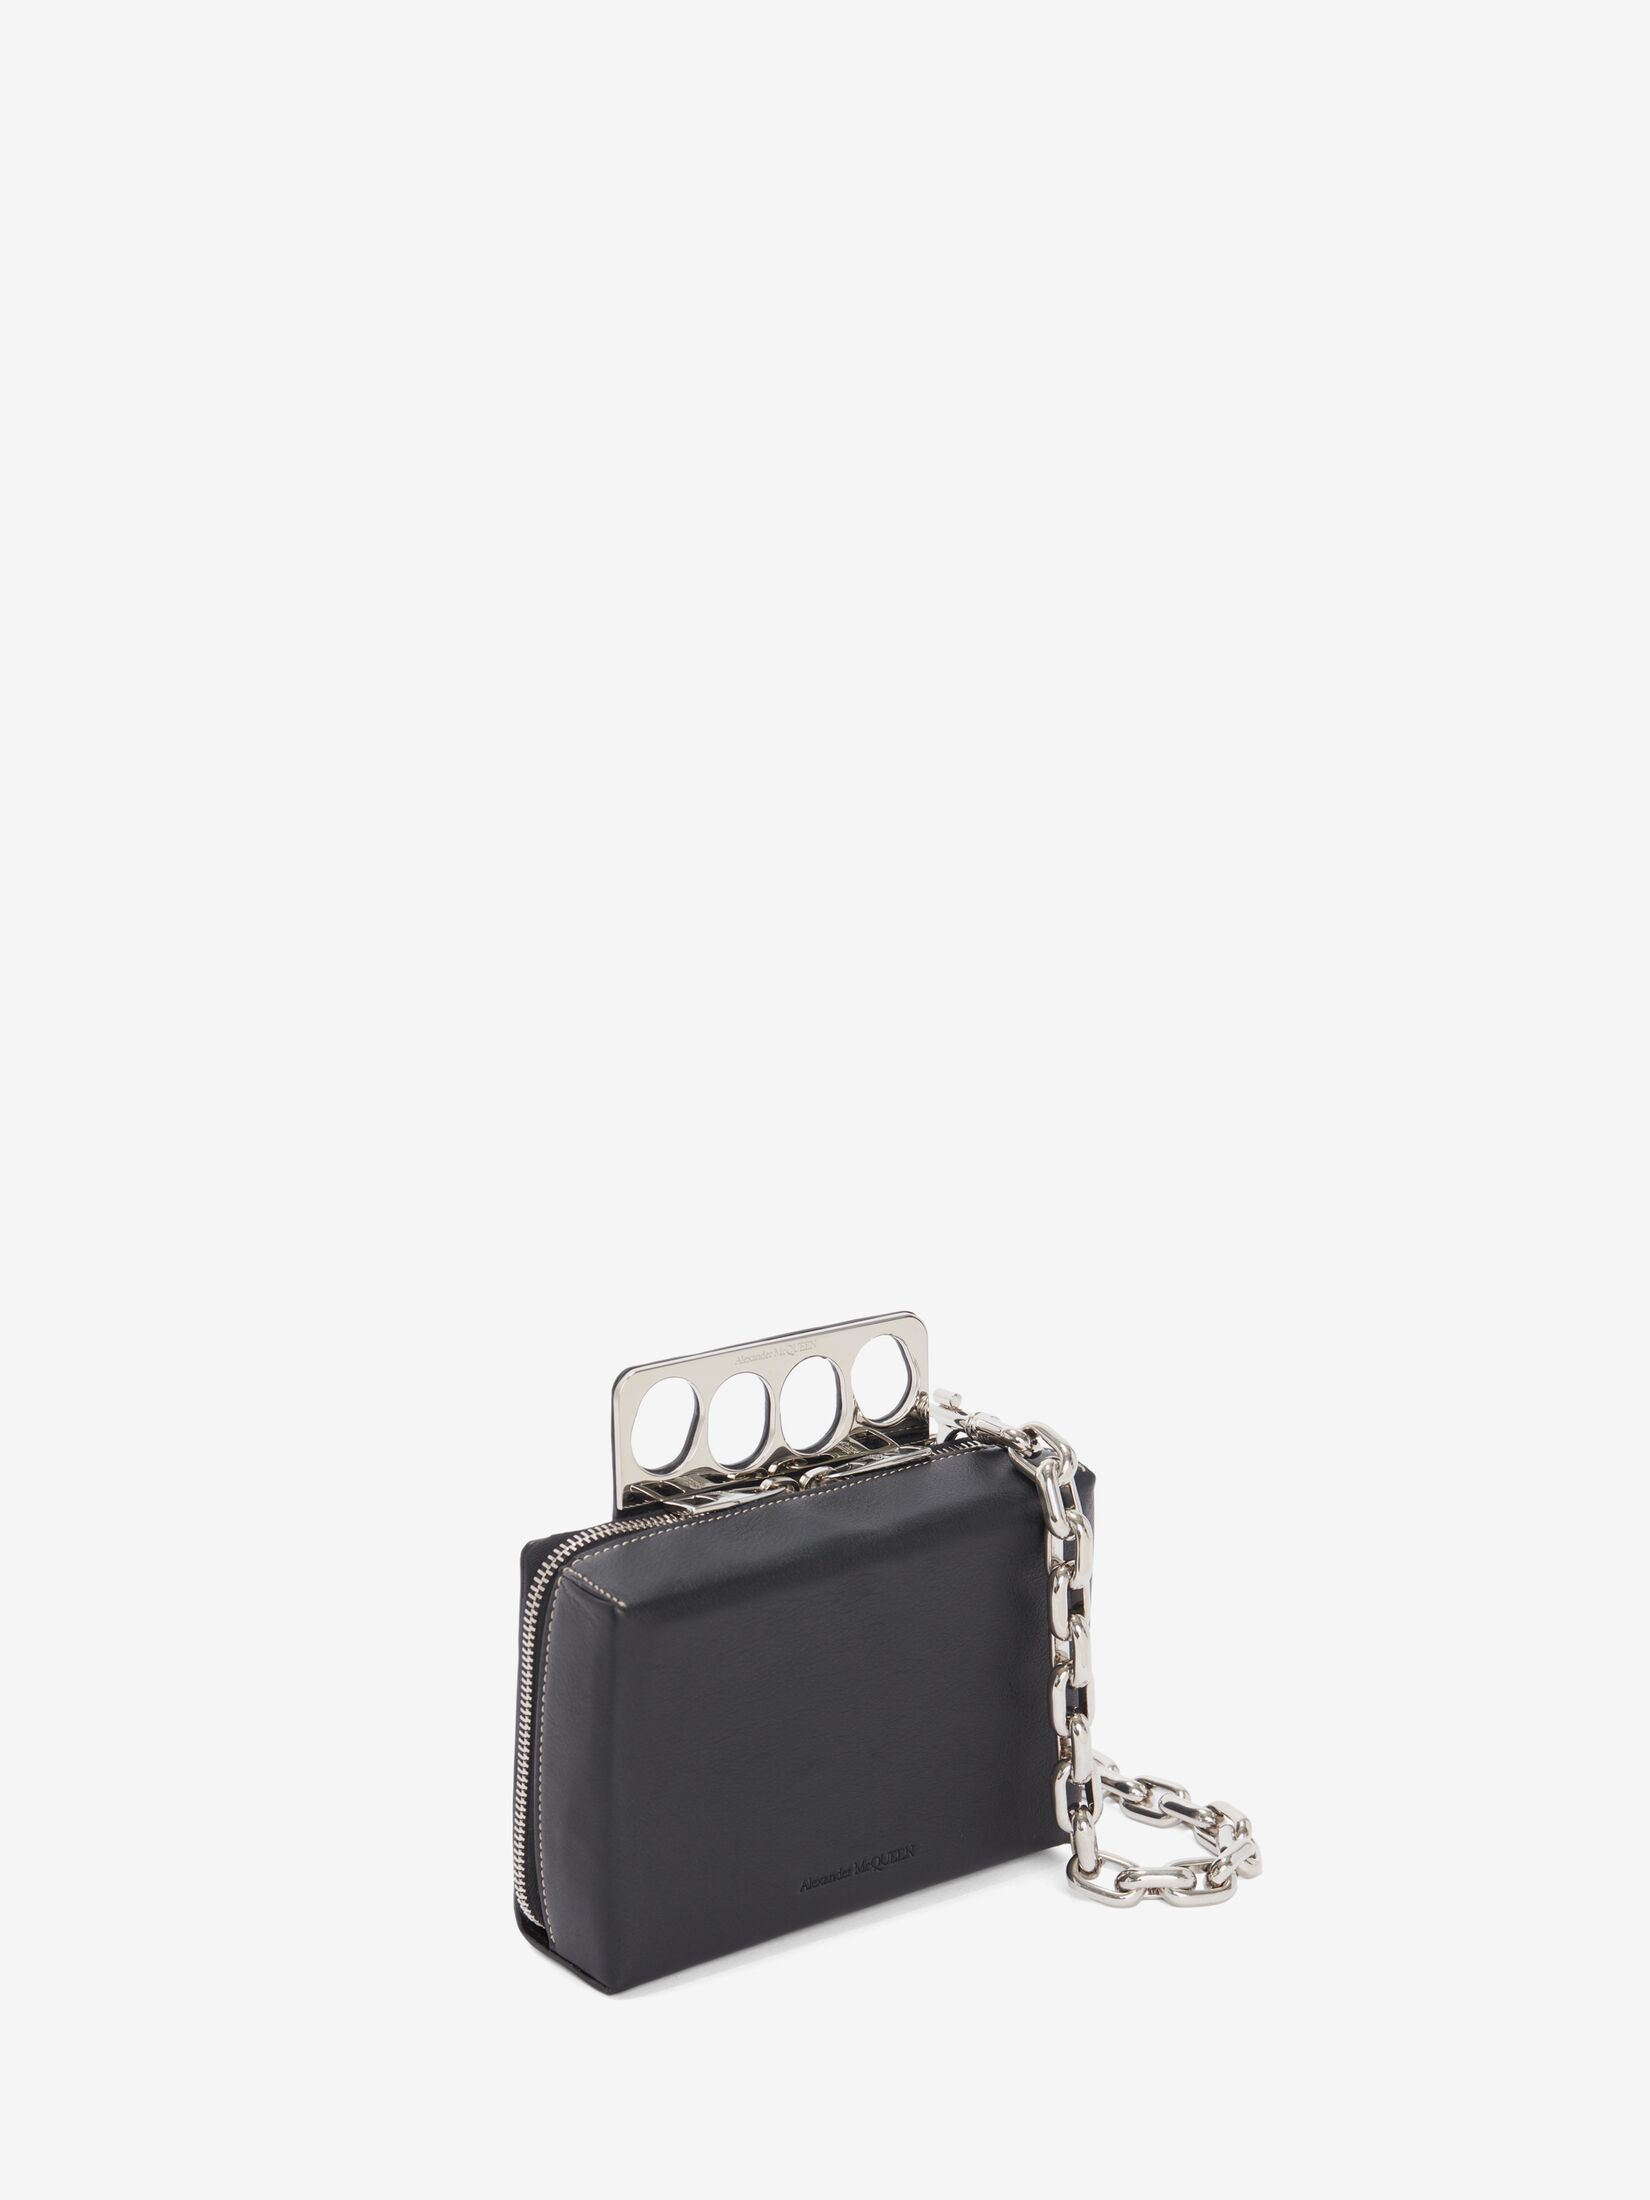 The Grip mini bag in Black | Alexander McQueen GB